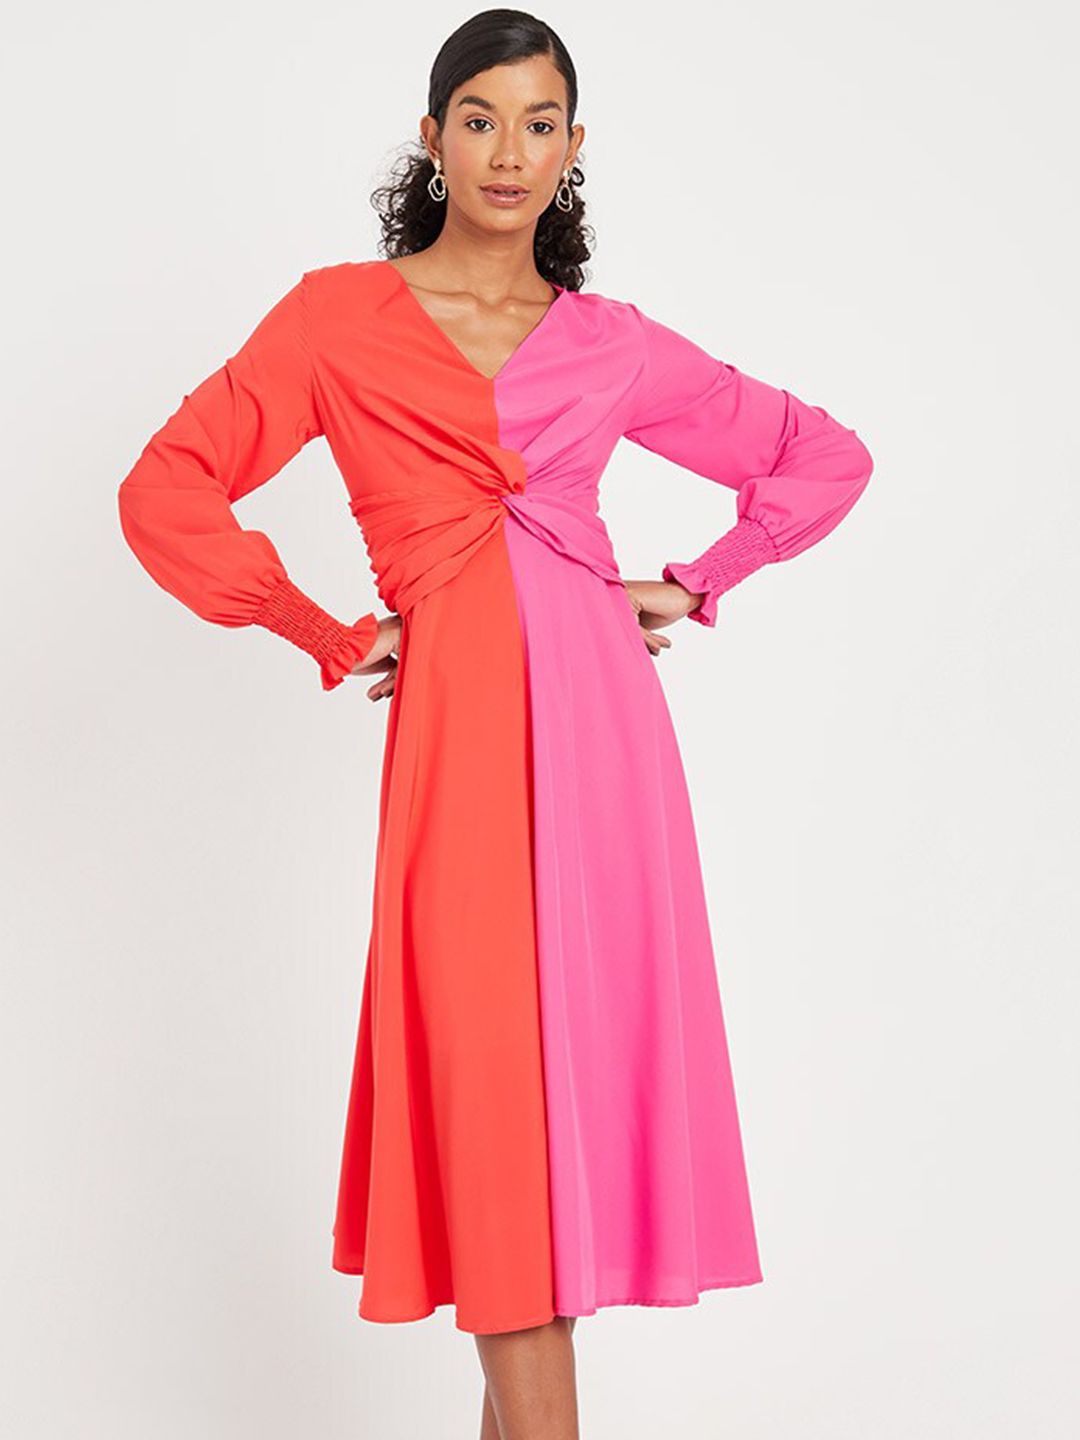 Styli Red Midi Dress Price in India